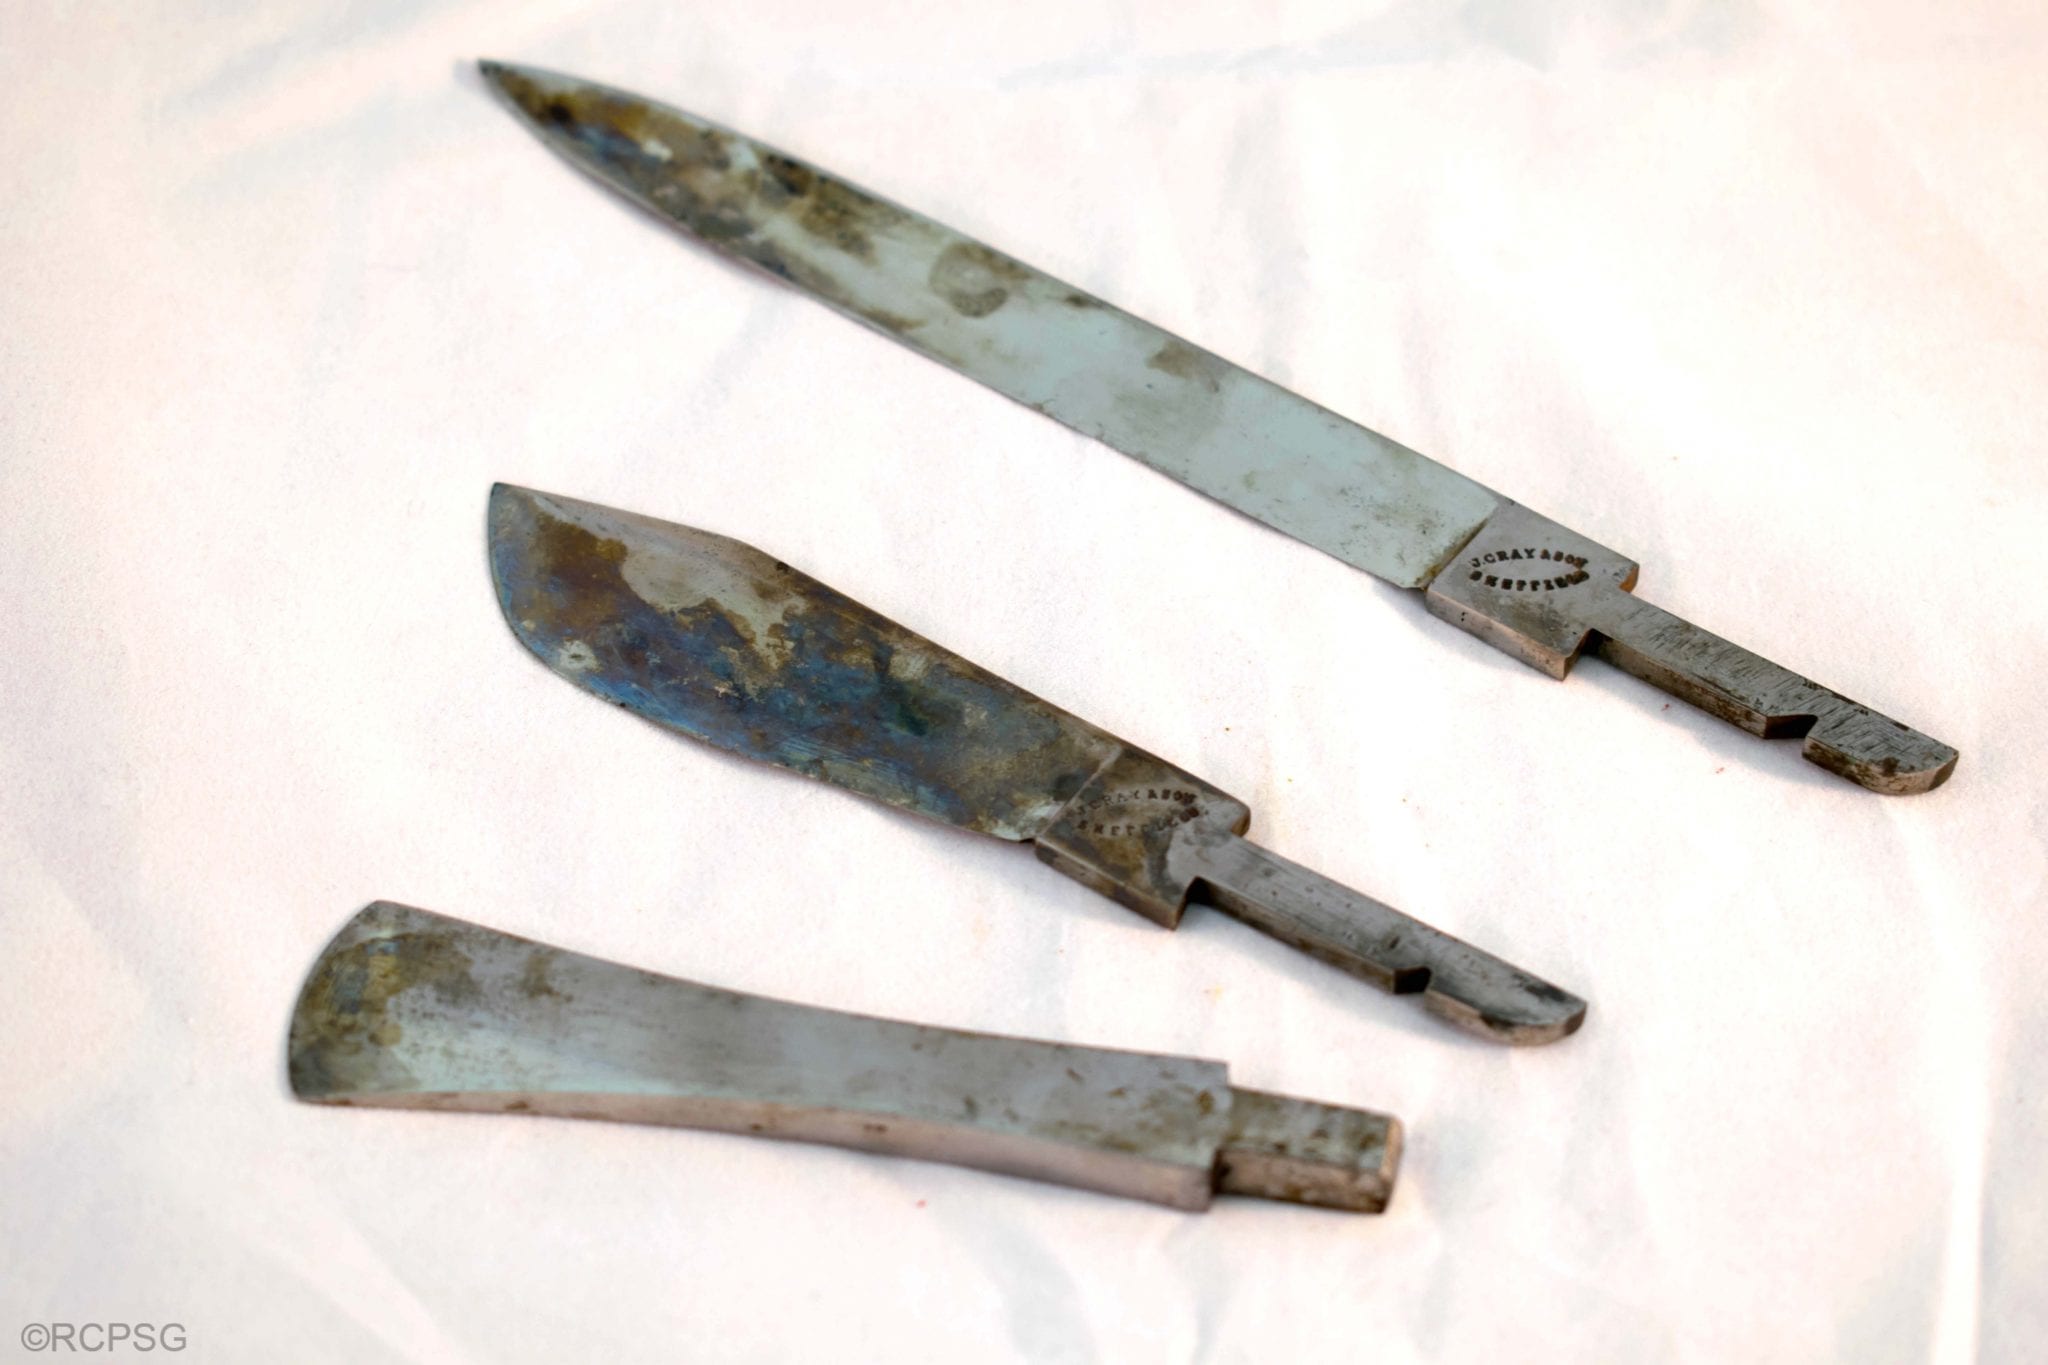 Scalpel blades (c.1900) used in post-mortem examinations